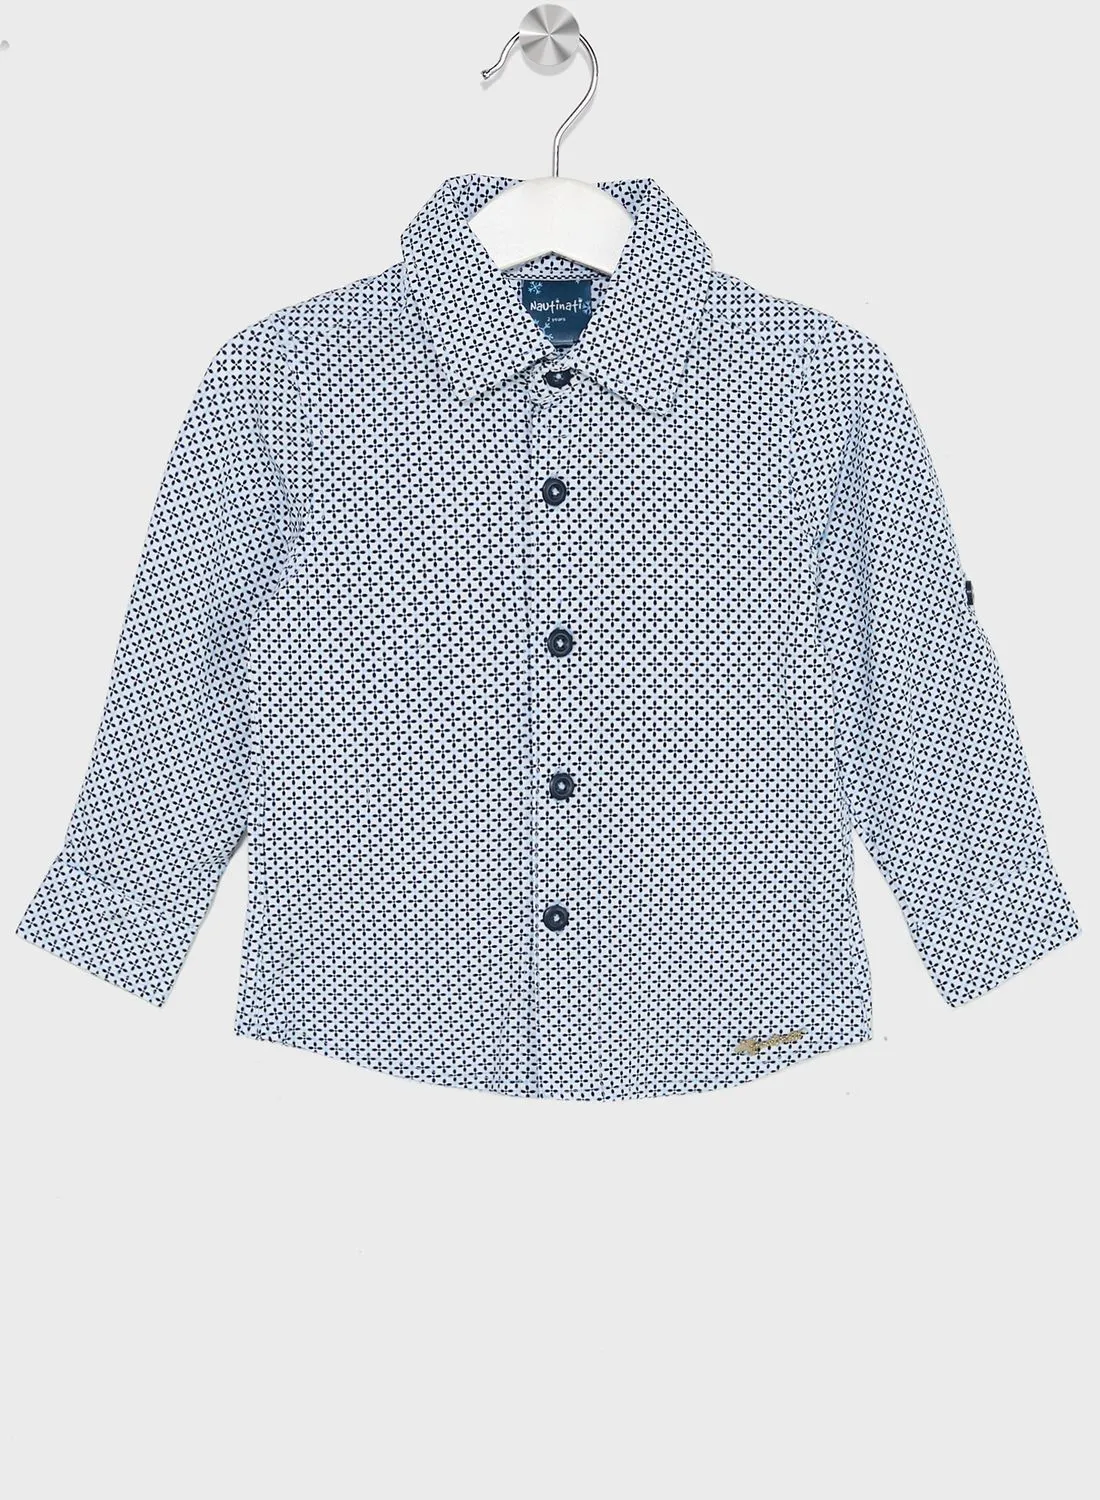 Nautinati Nauti Nati Boys Navy Blue Standard Opaque Printed Casual Shirt